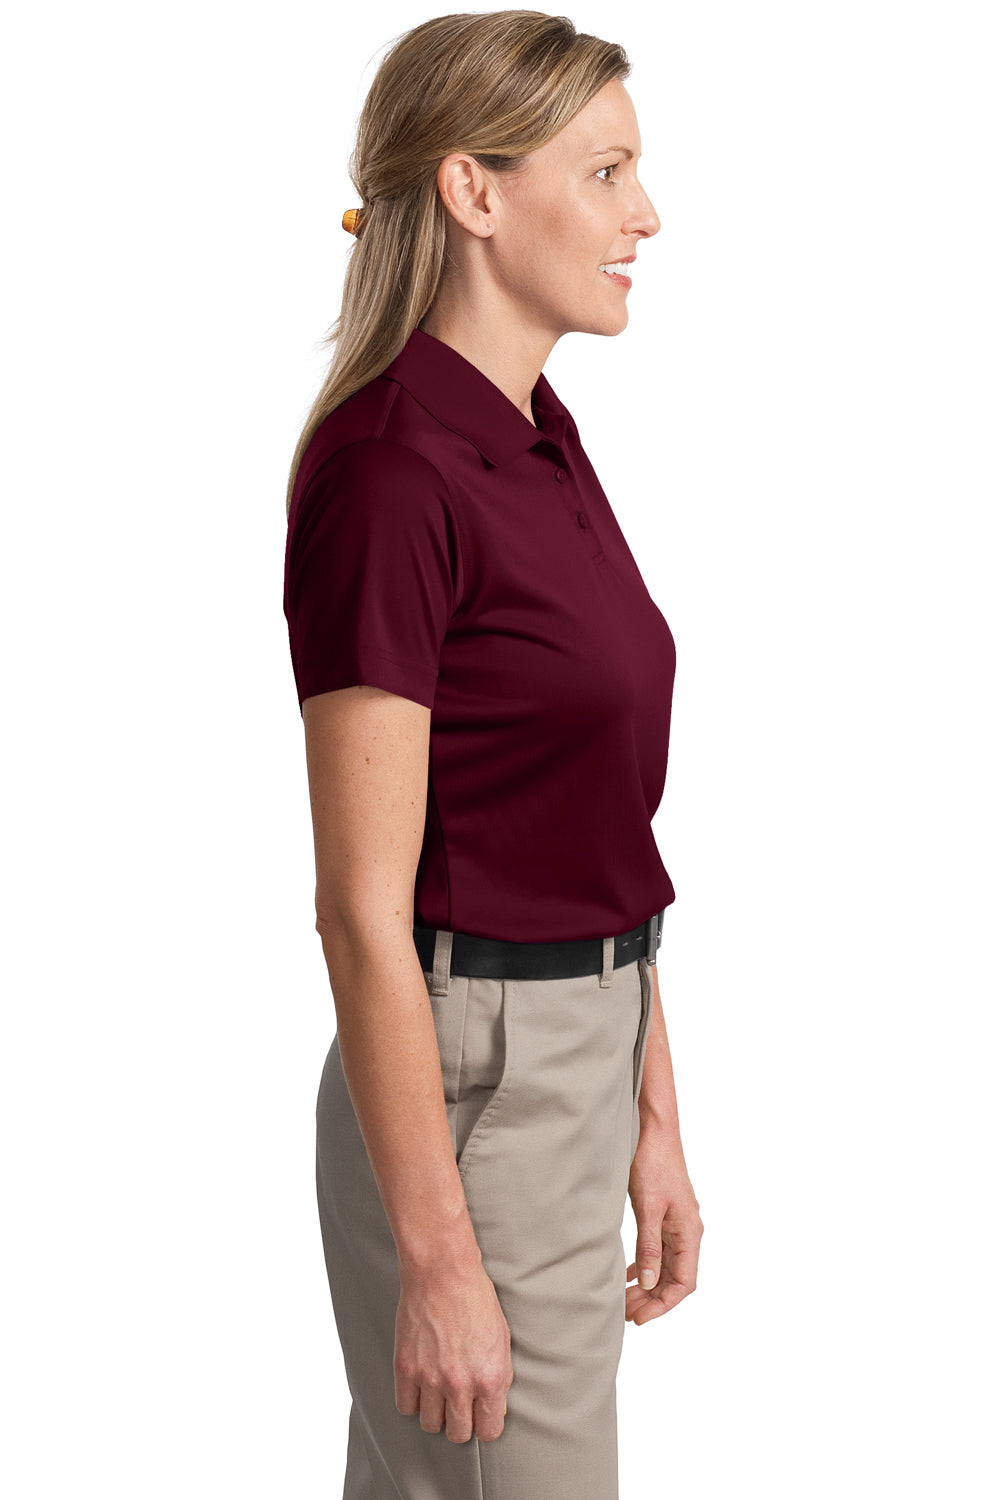 CornerStone CS413 Womens Select Moisture Wicking Short Sleeve Polo Shirt Maroon Side